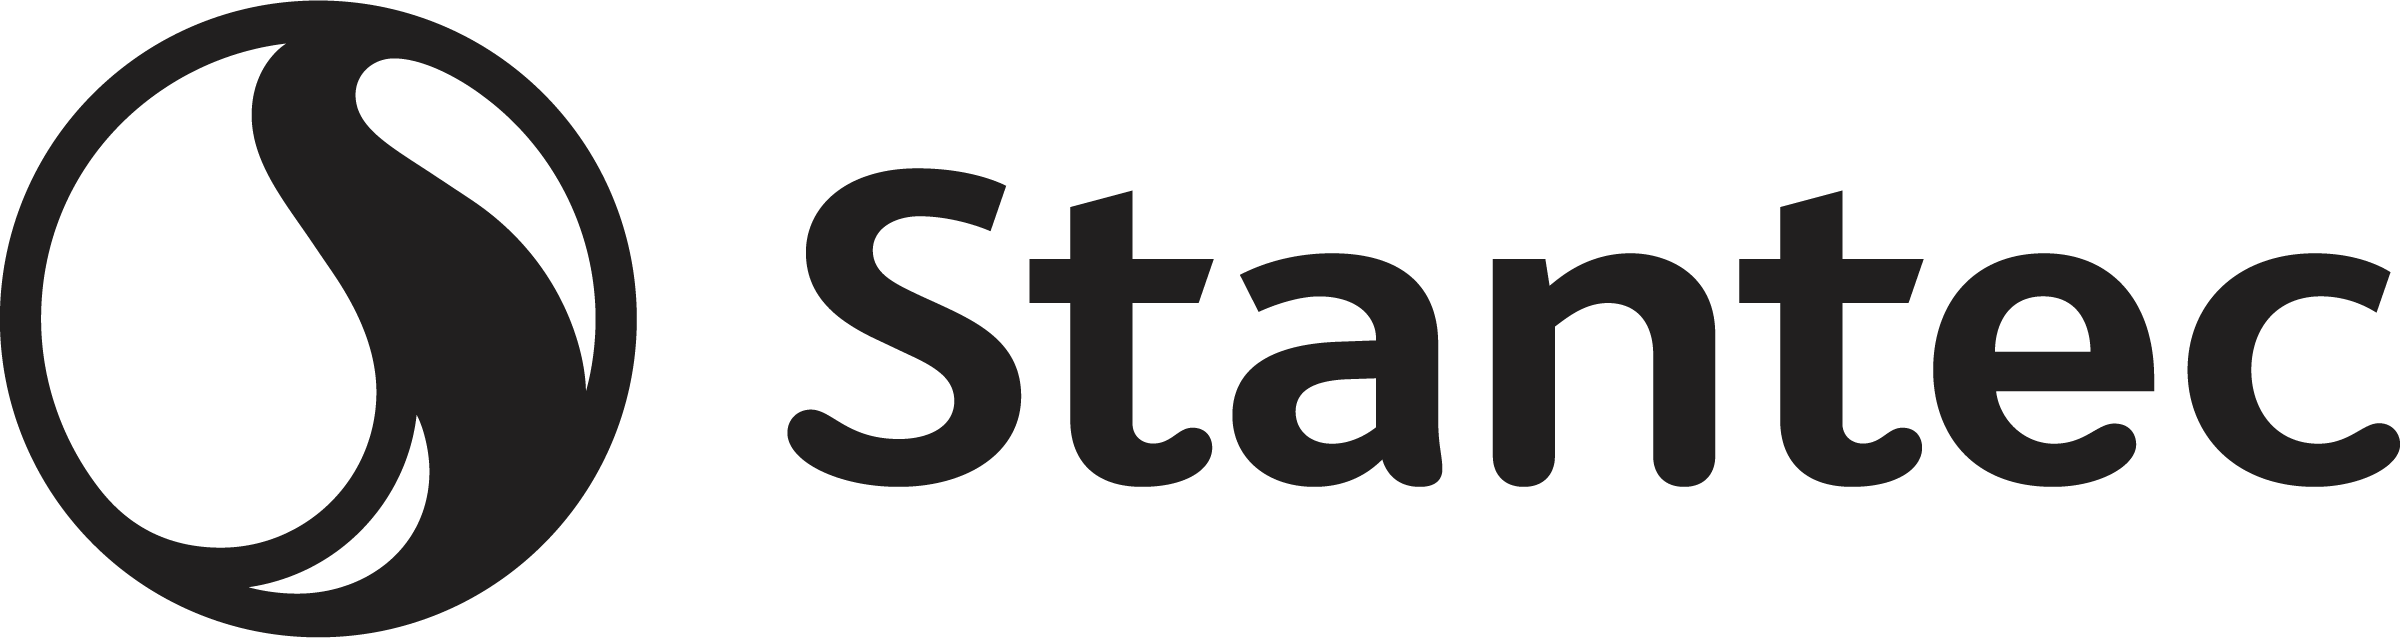 Stantec logo black